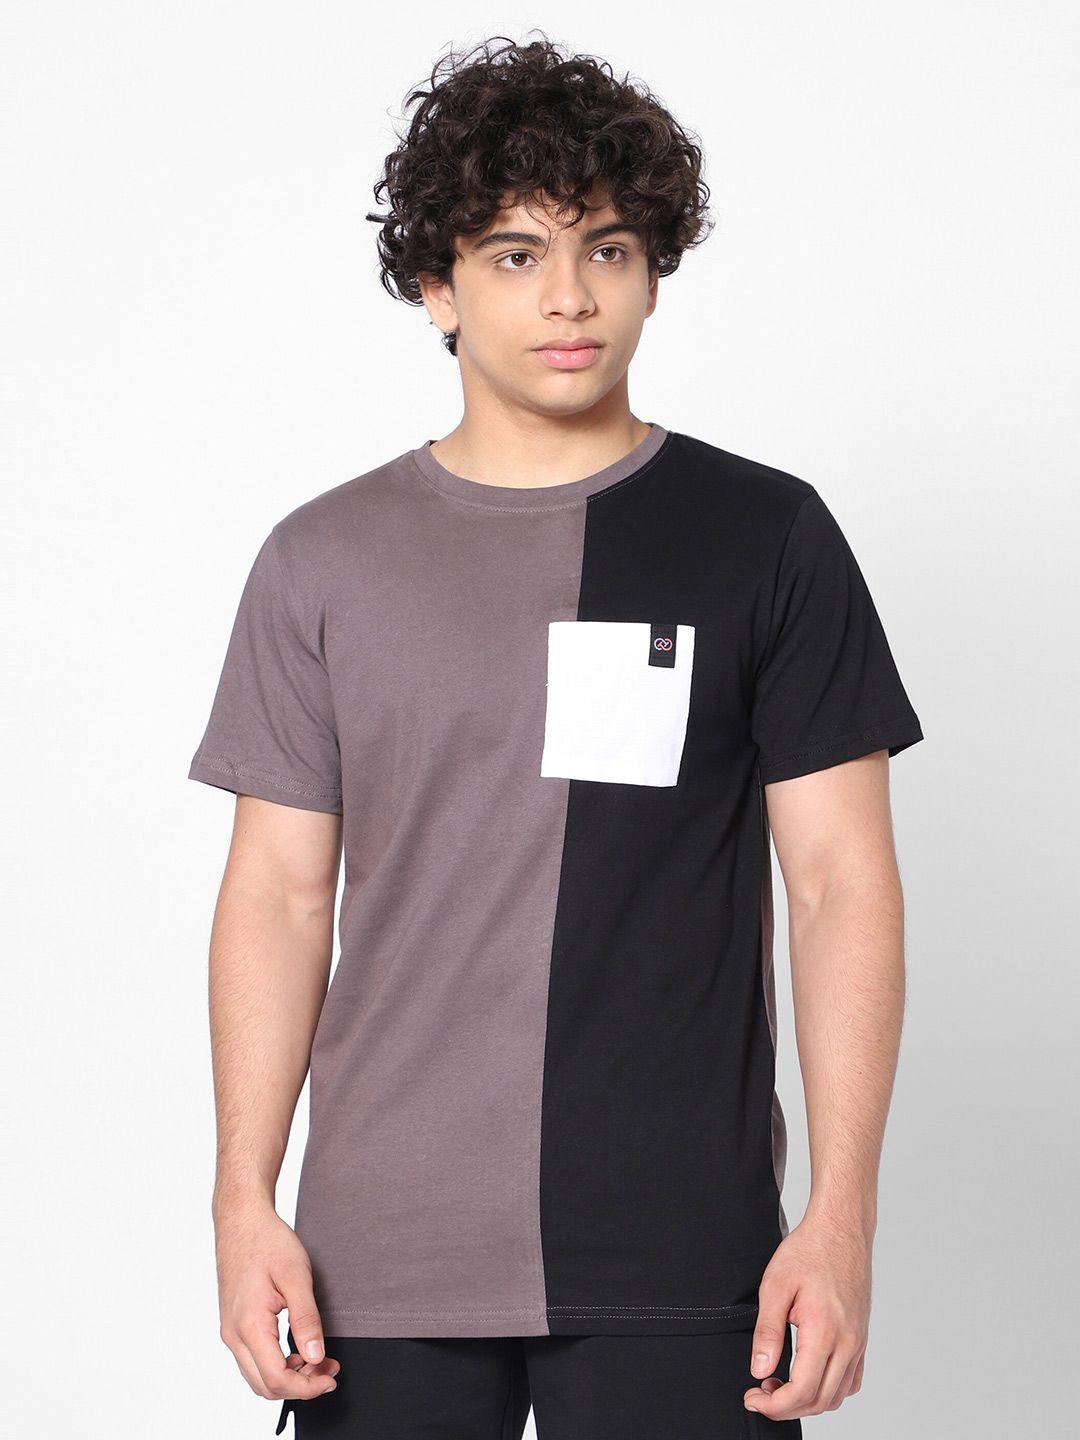 teentrums boys colourblocked cotton t-shirt